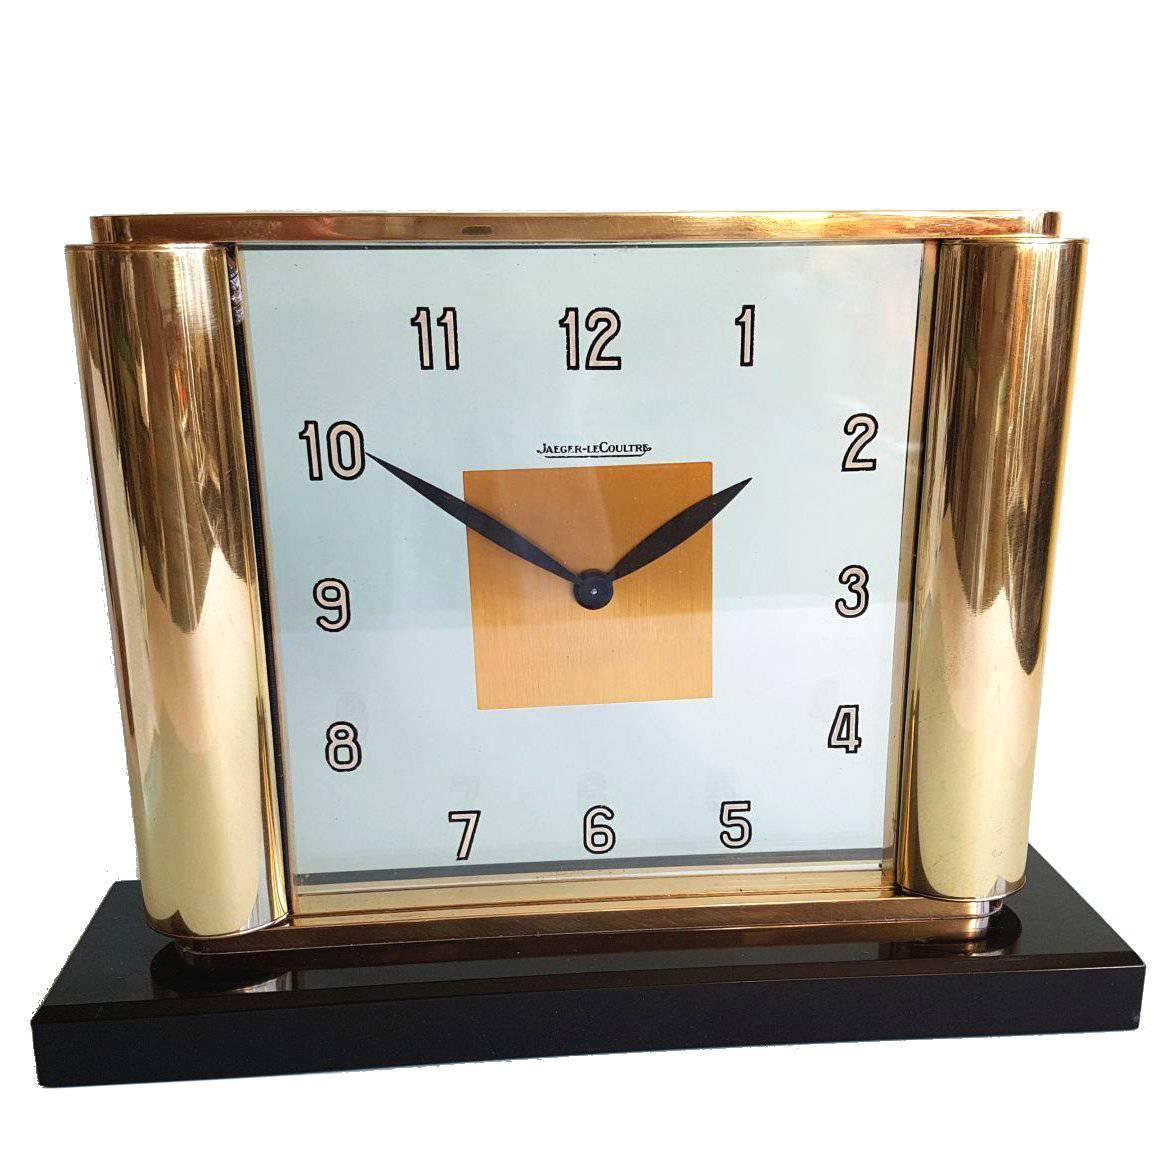  Rare Art Deco Clock by Jaeger-LeCoultre  c1930